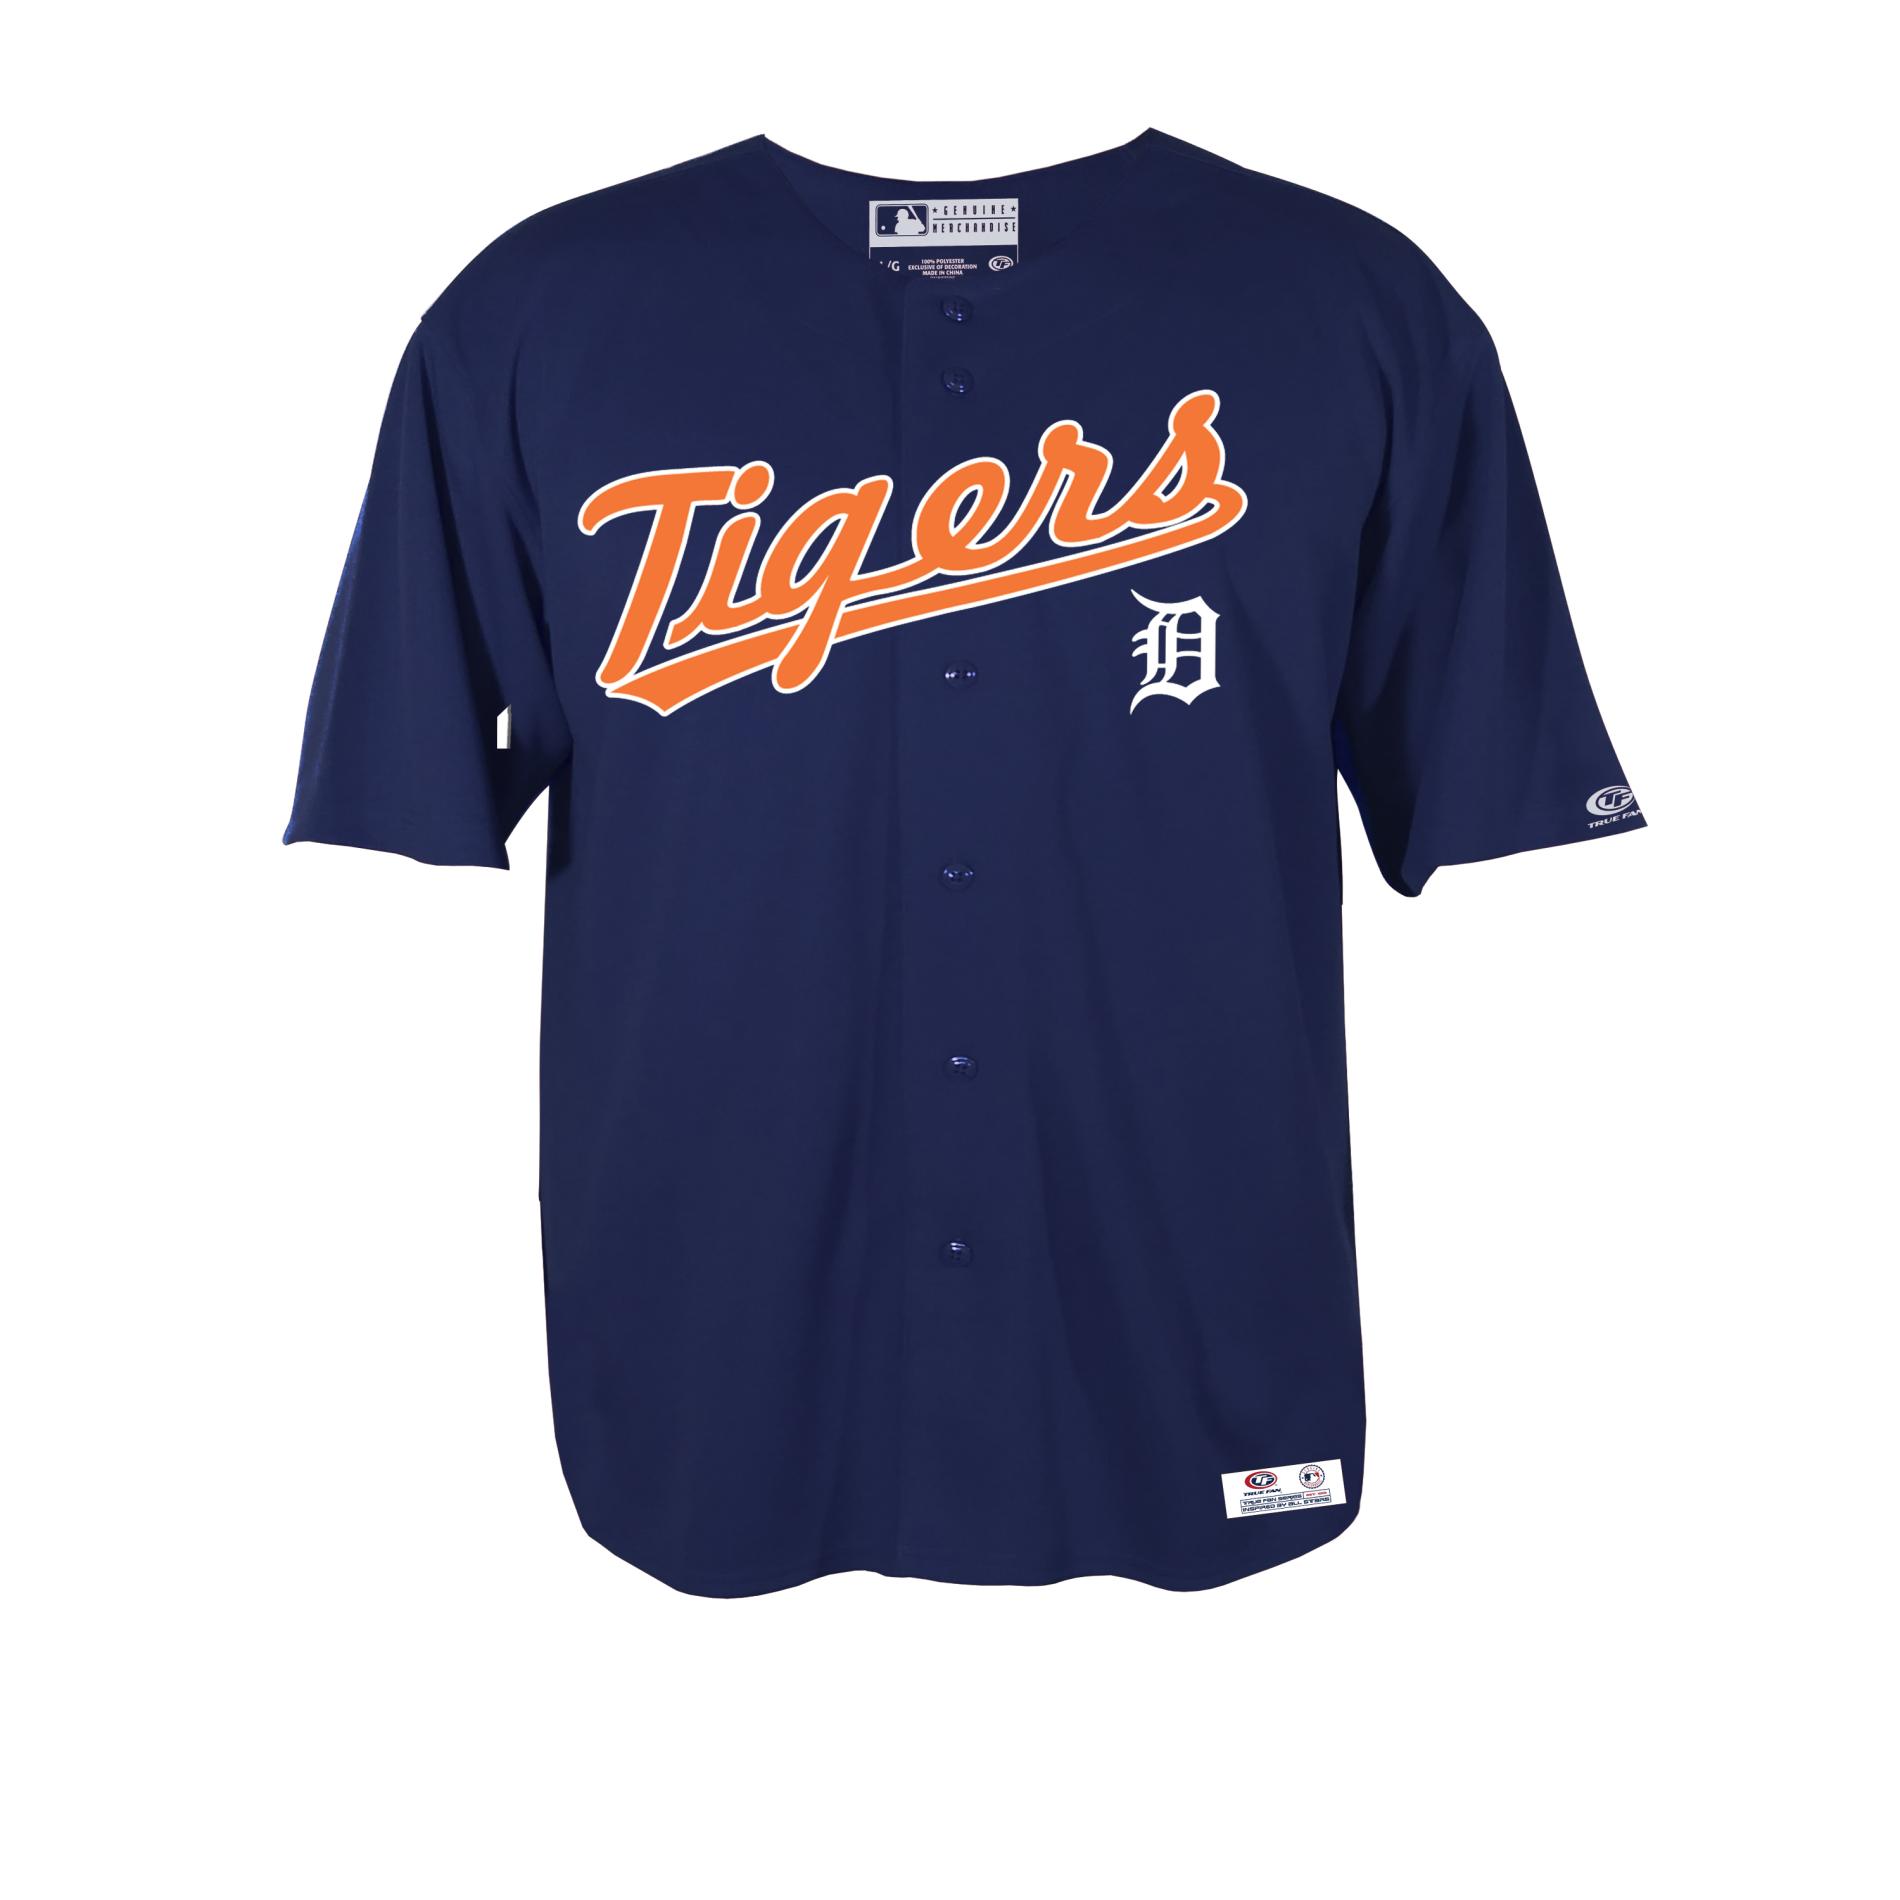 MLB Boy's Baseball Jersey - Detroit Tigers